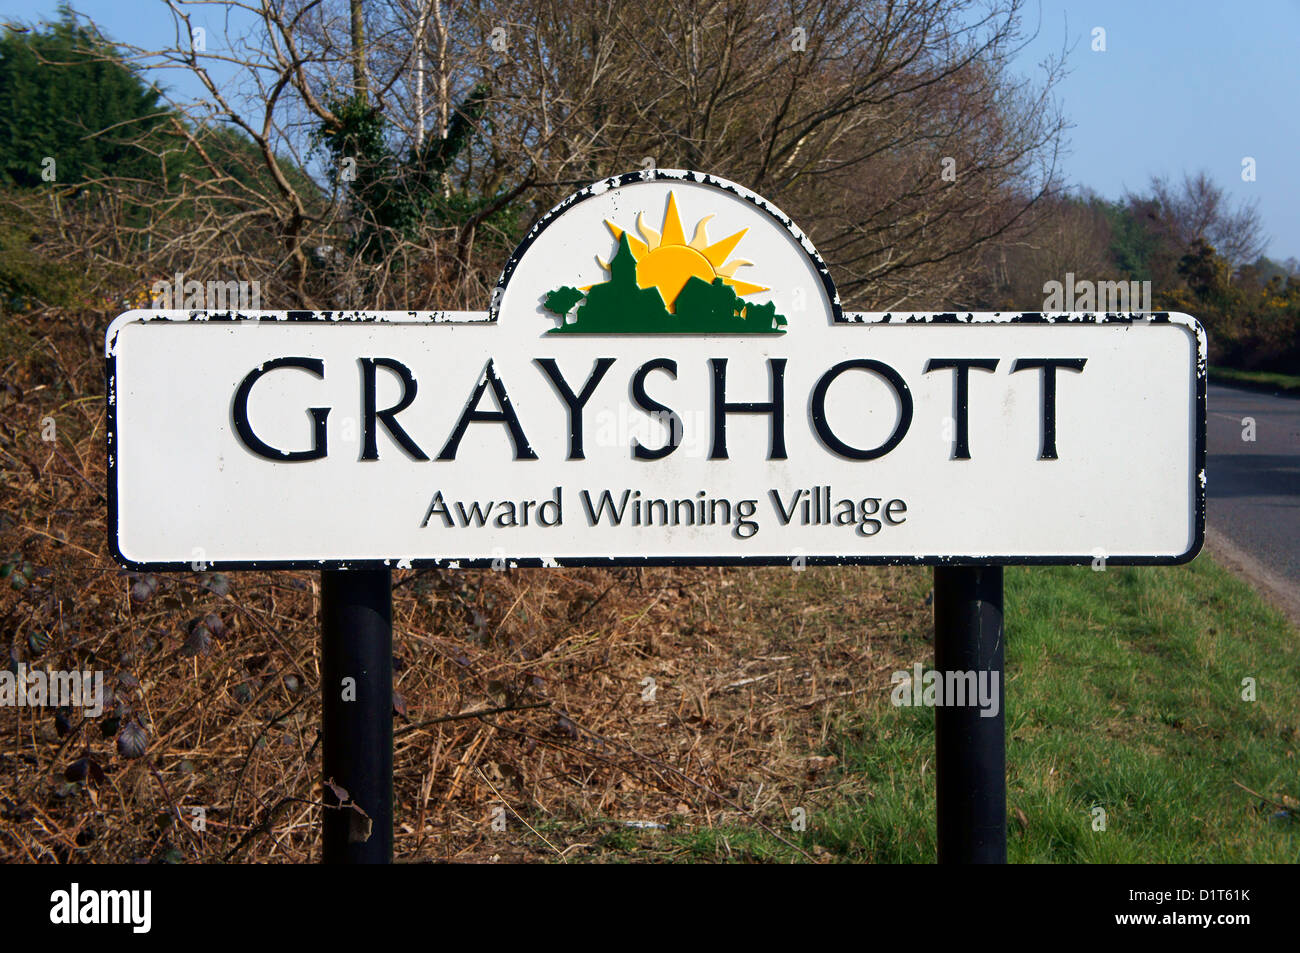 Grayshott award winning village sign Stock Photo